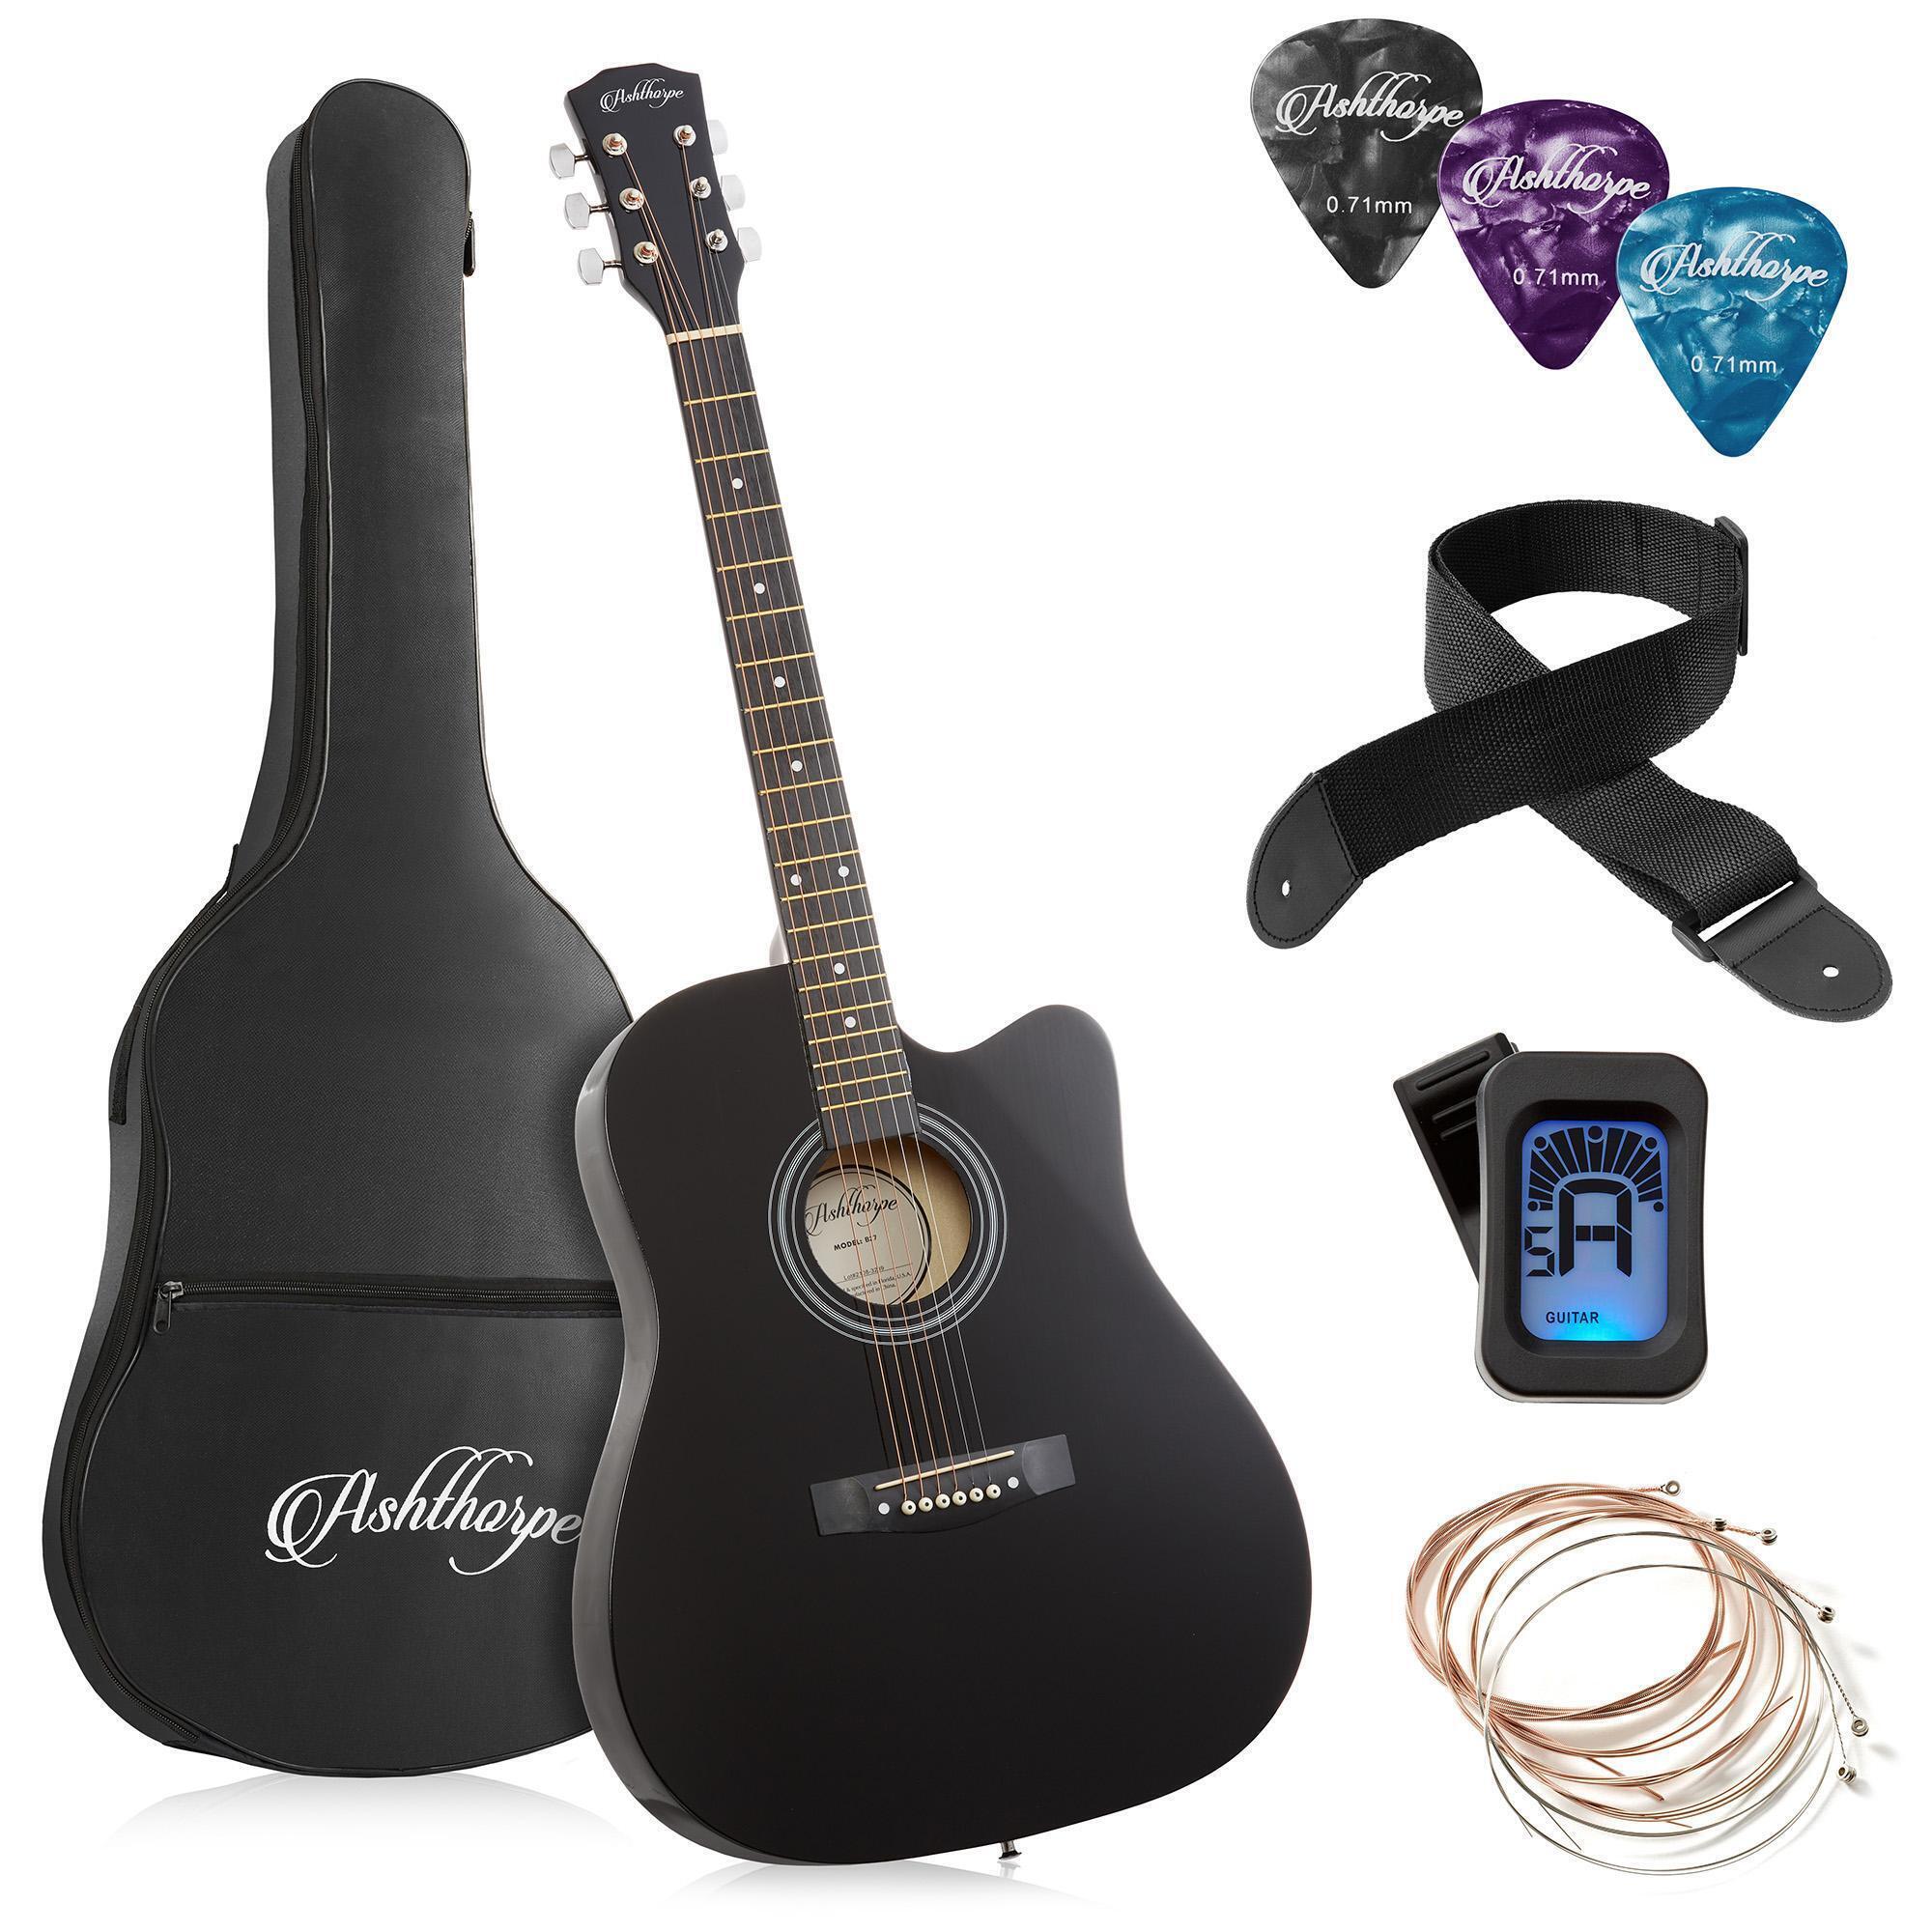 Ashthorpe 41-Inch Beginner Cutaway Acoustic Guitar Package - Black, Starter Kit w/ Gig Bag